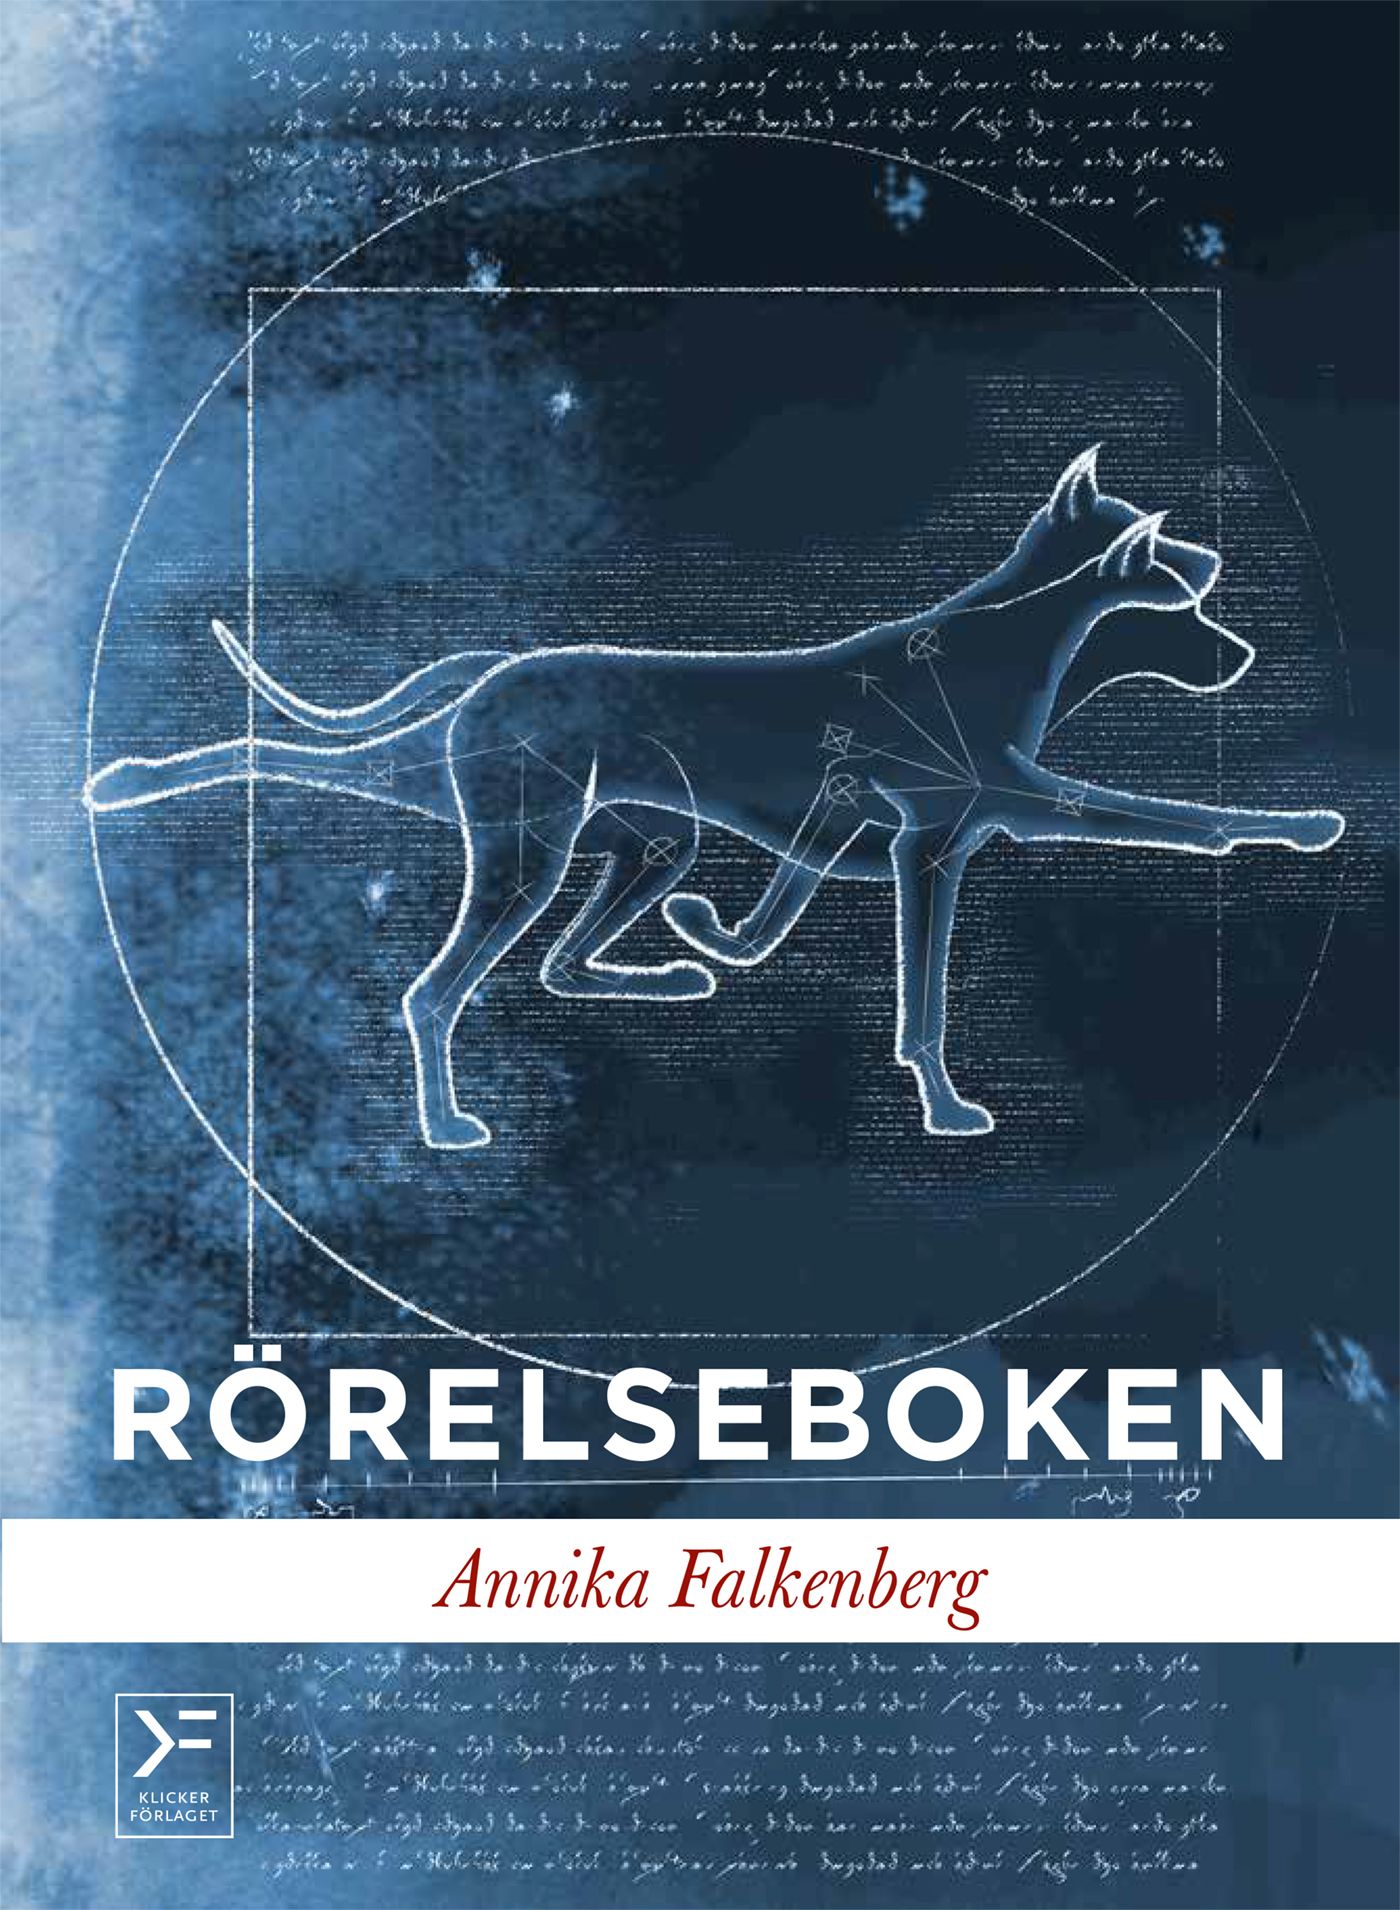 Rörelseboken, eBook by Annika Falkenberg